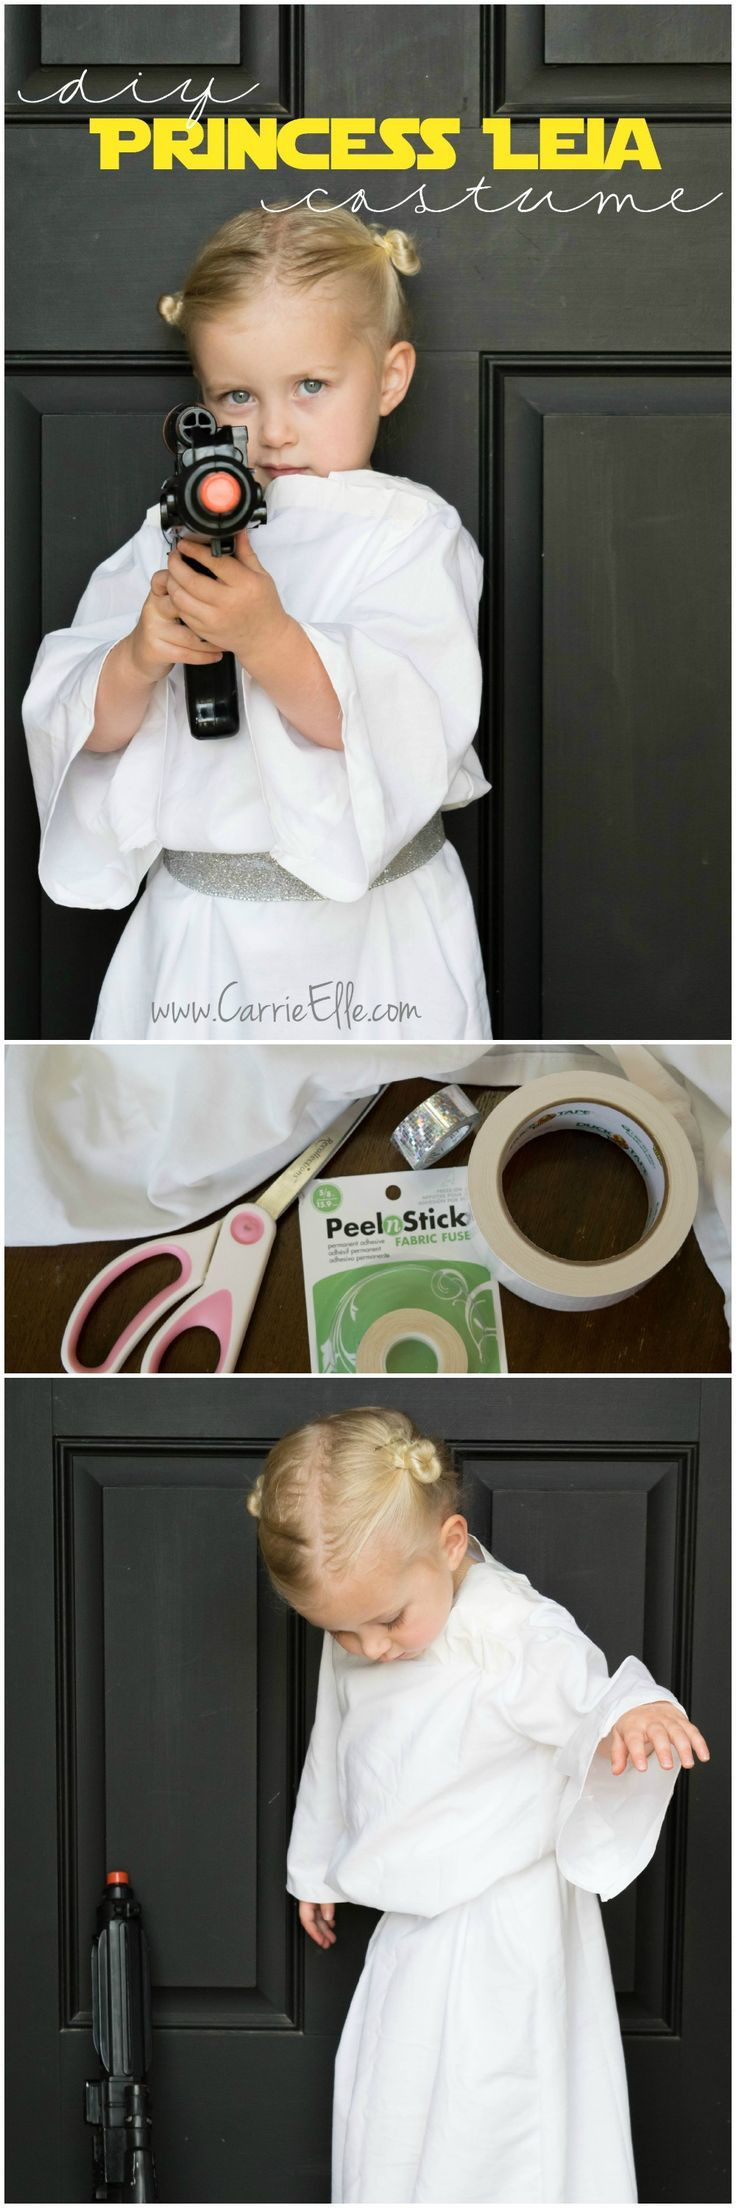 Best ideas about DIY Princess Leia Costume
. Save or Pin No Sew DIY Princess Leia Costume for Kids Now.